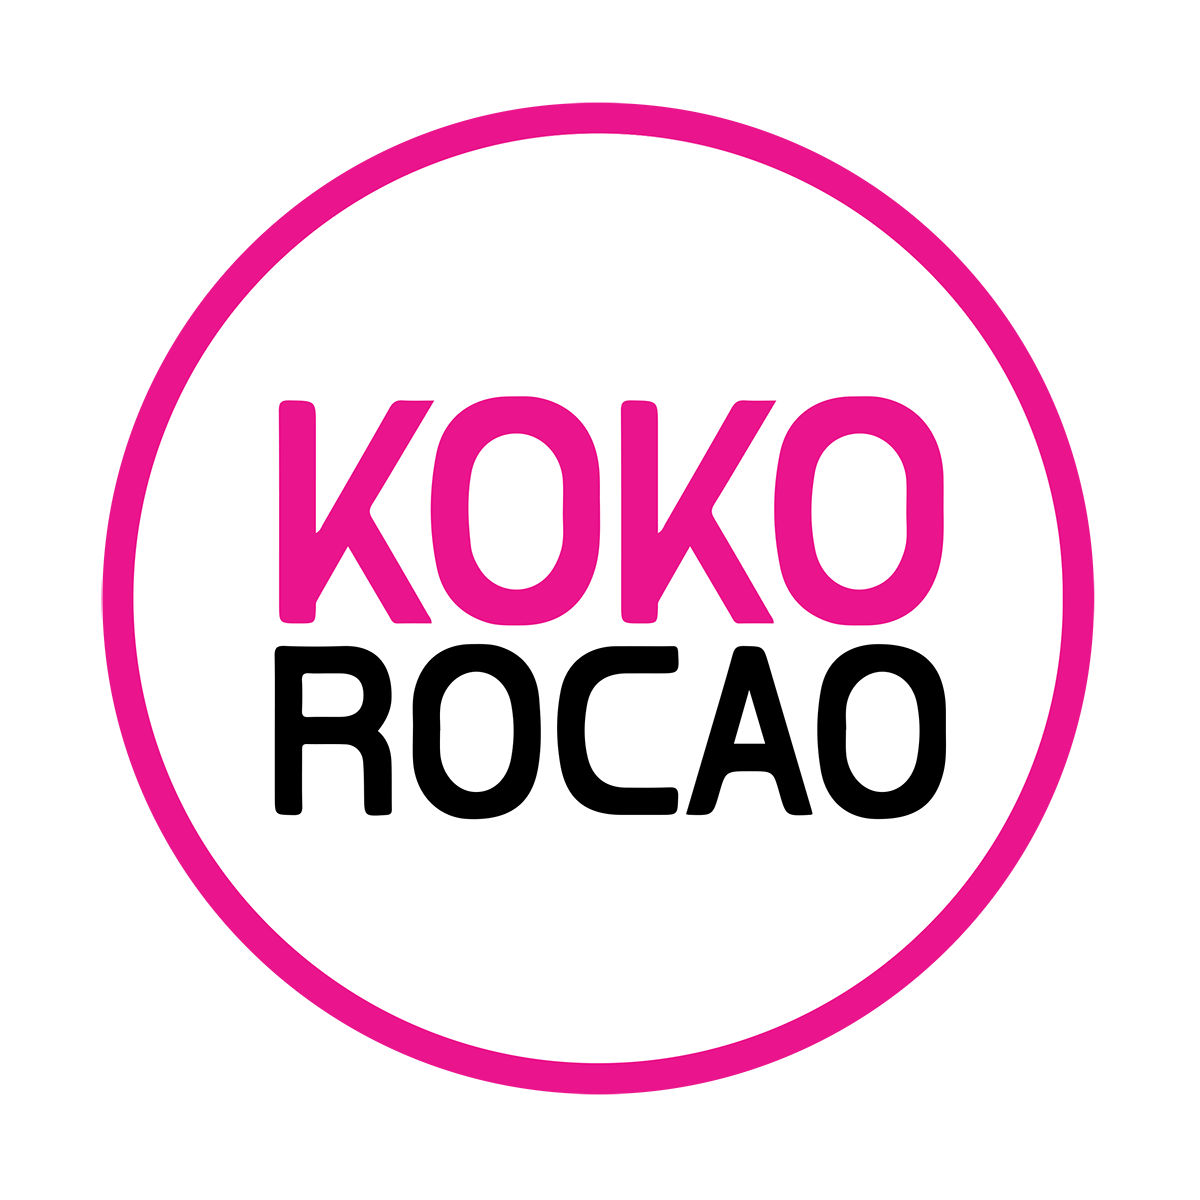 Kokorocao